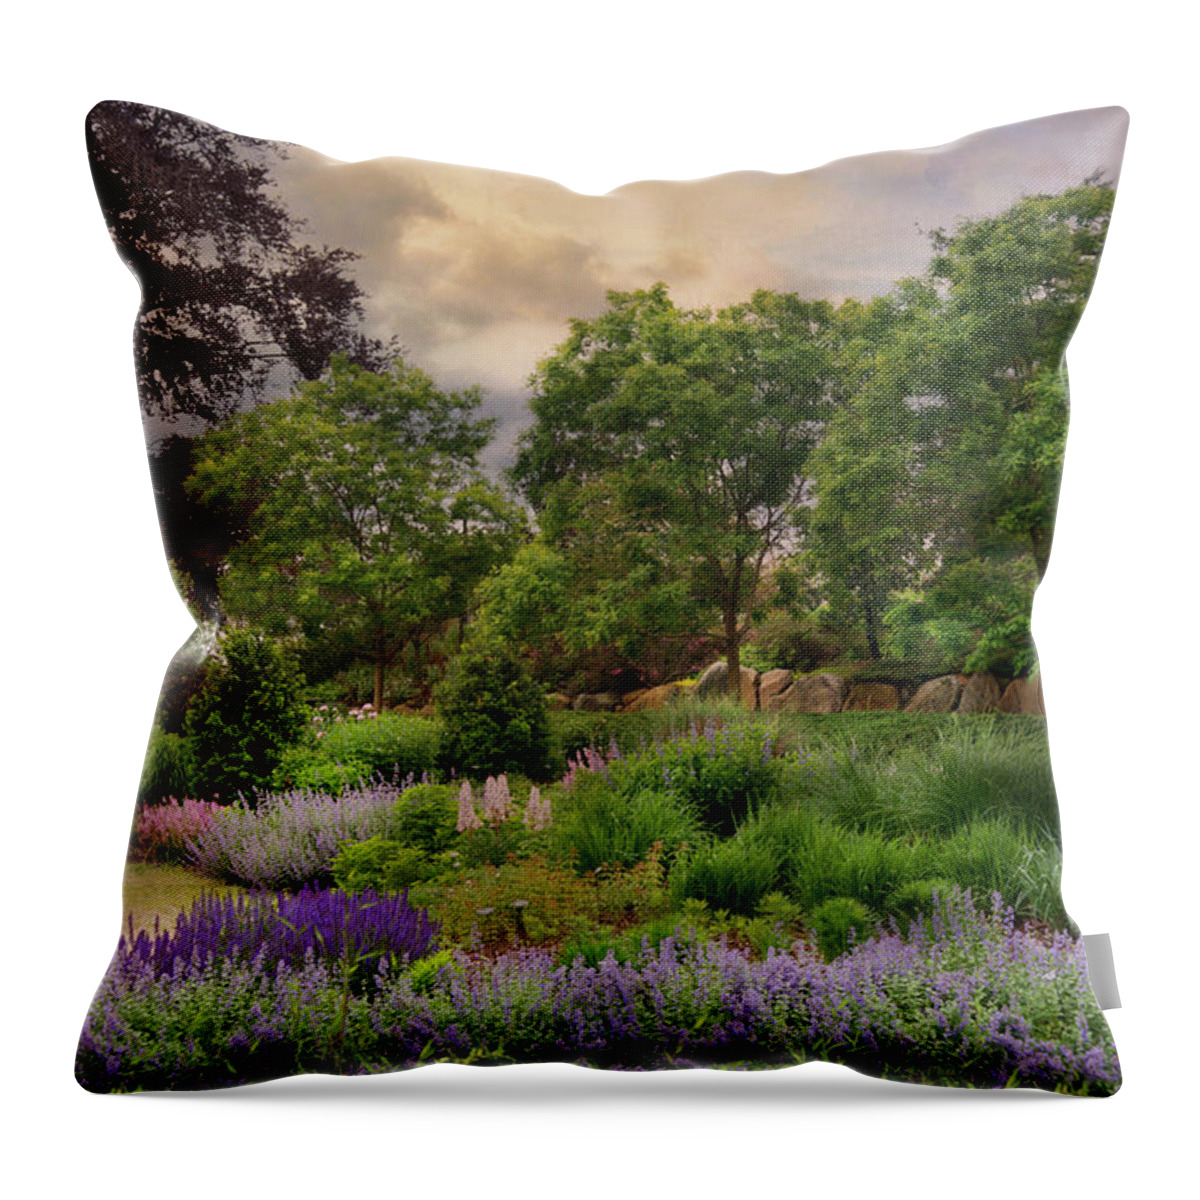 Garden Throw Pillow featuring the photograph Spring Awakening #2 by Robin-Lee Vieira